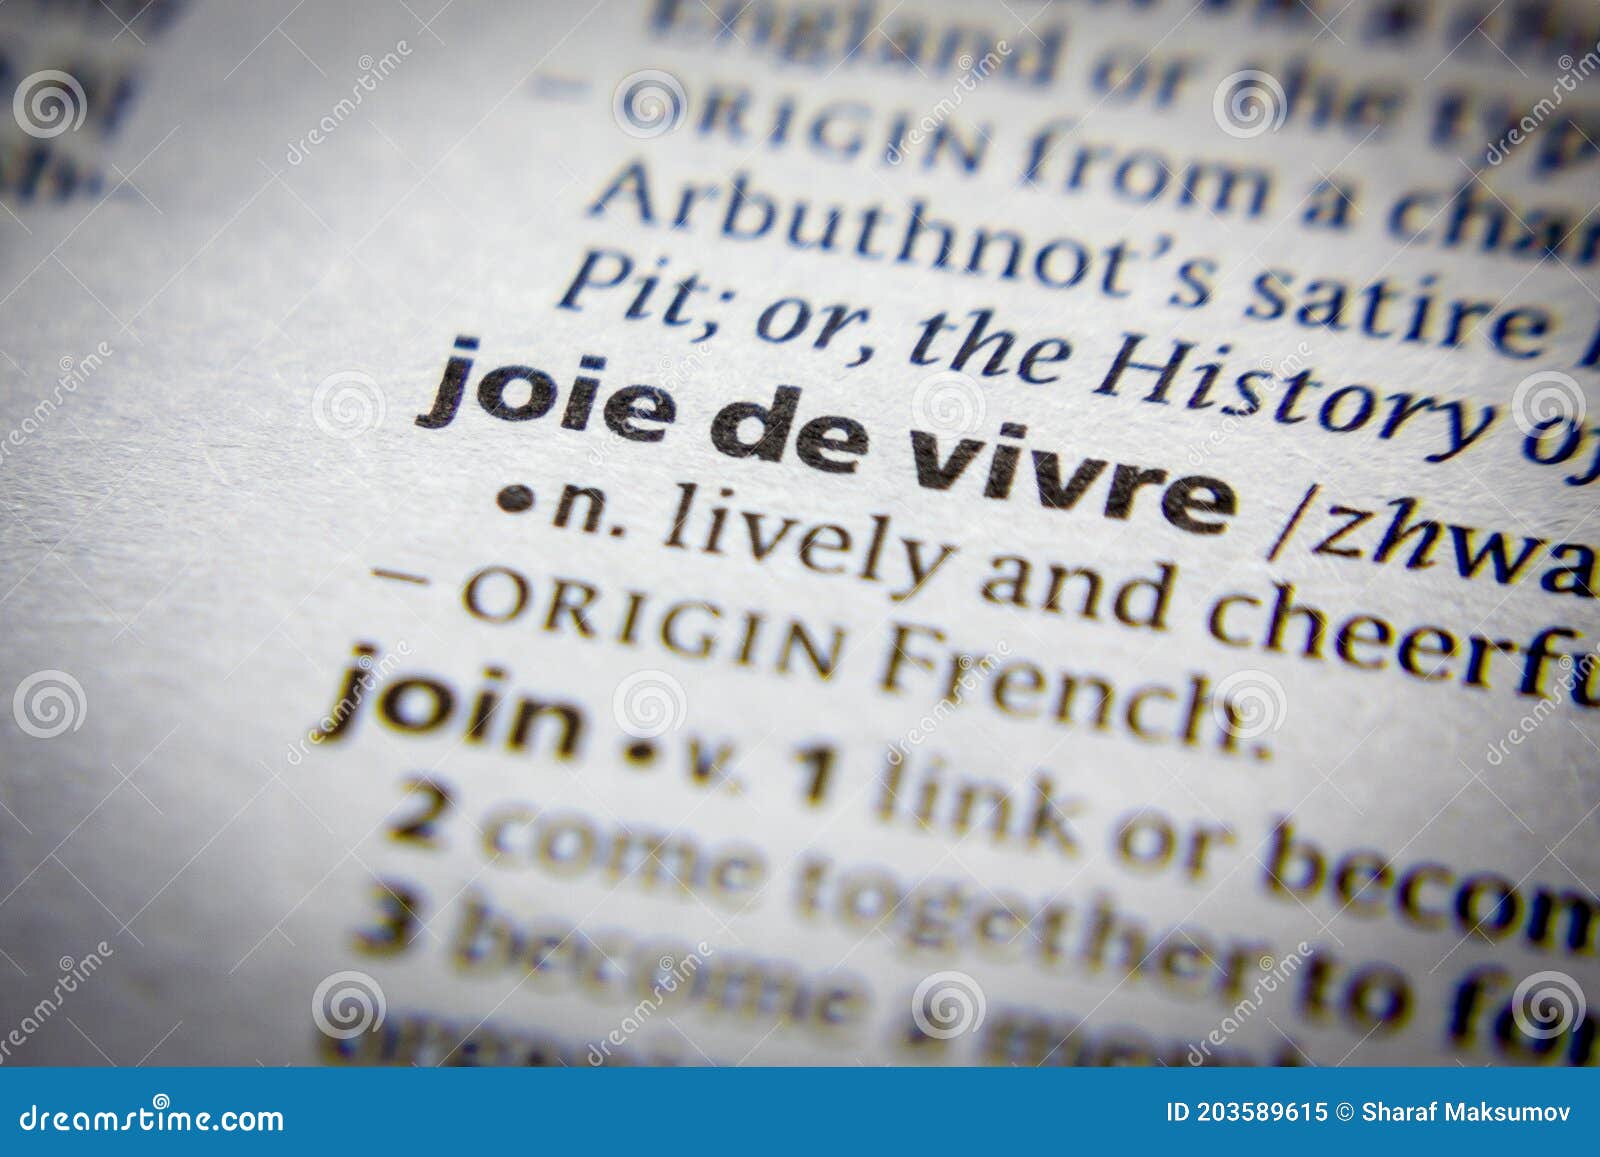 word or phrase joie de vivre in a dictionary.